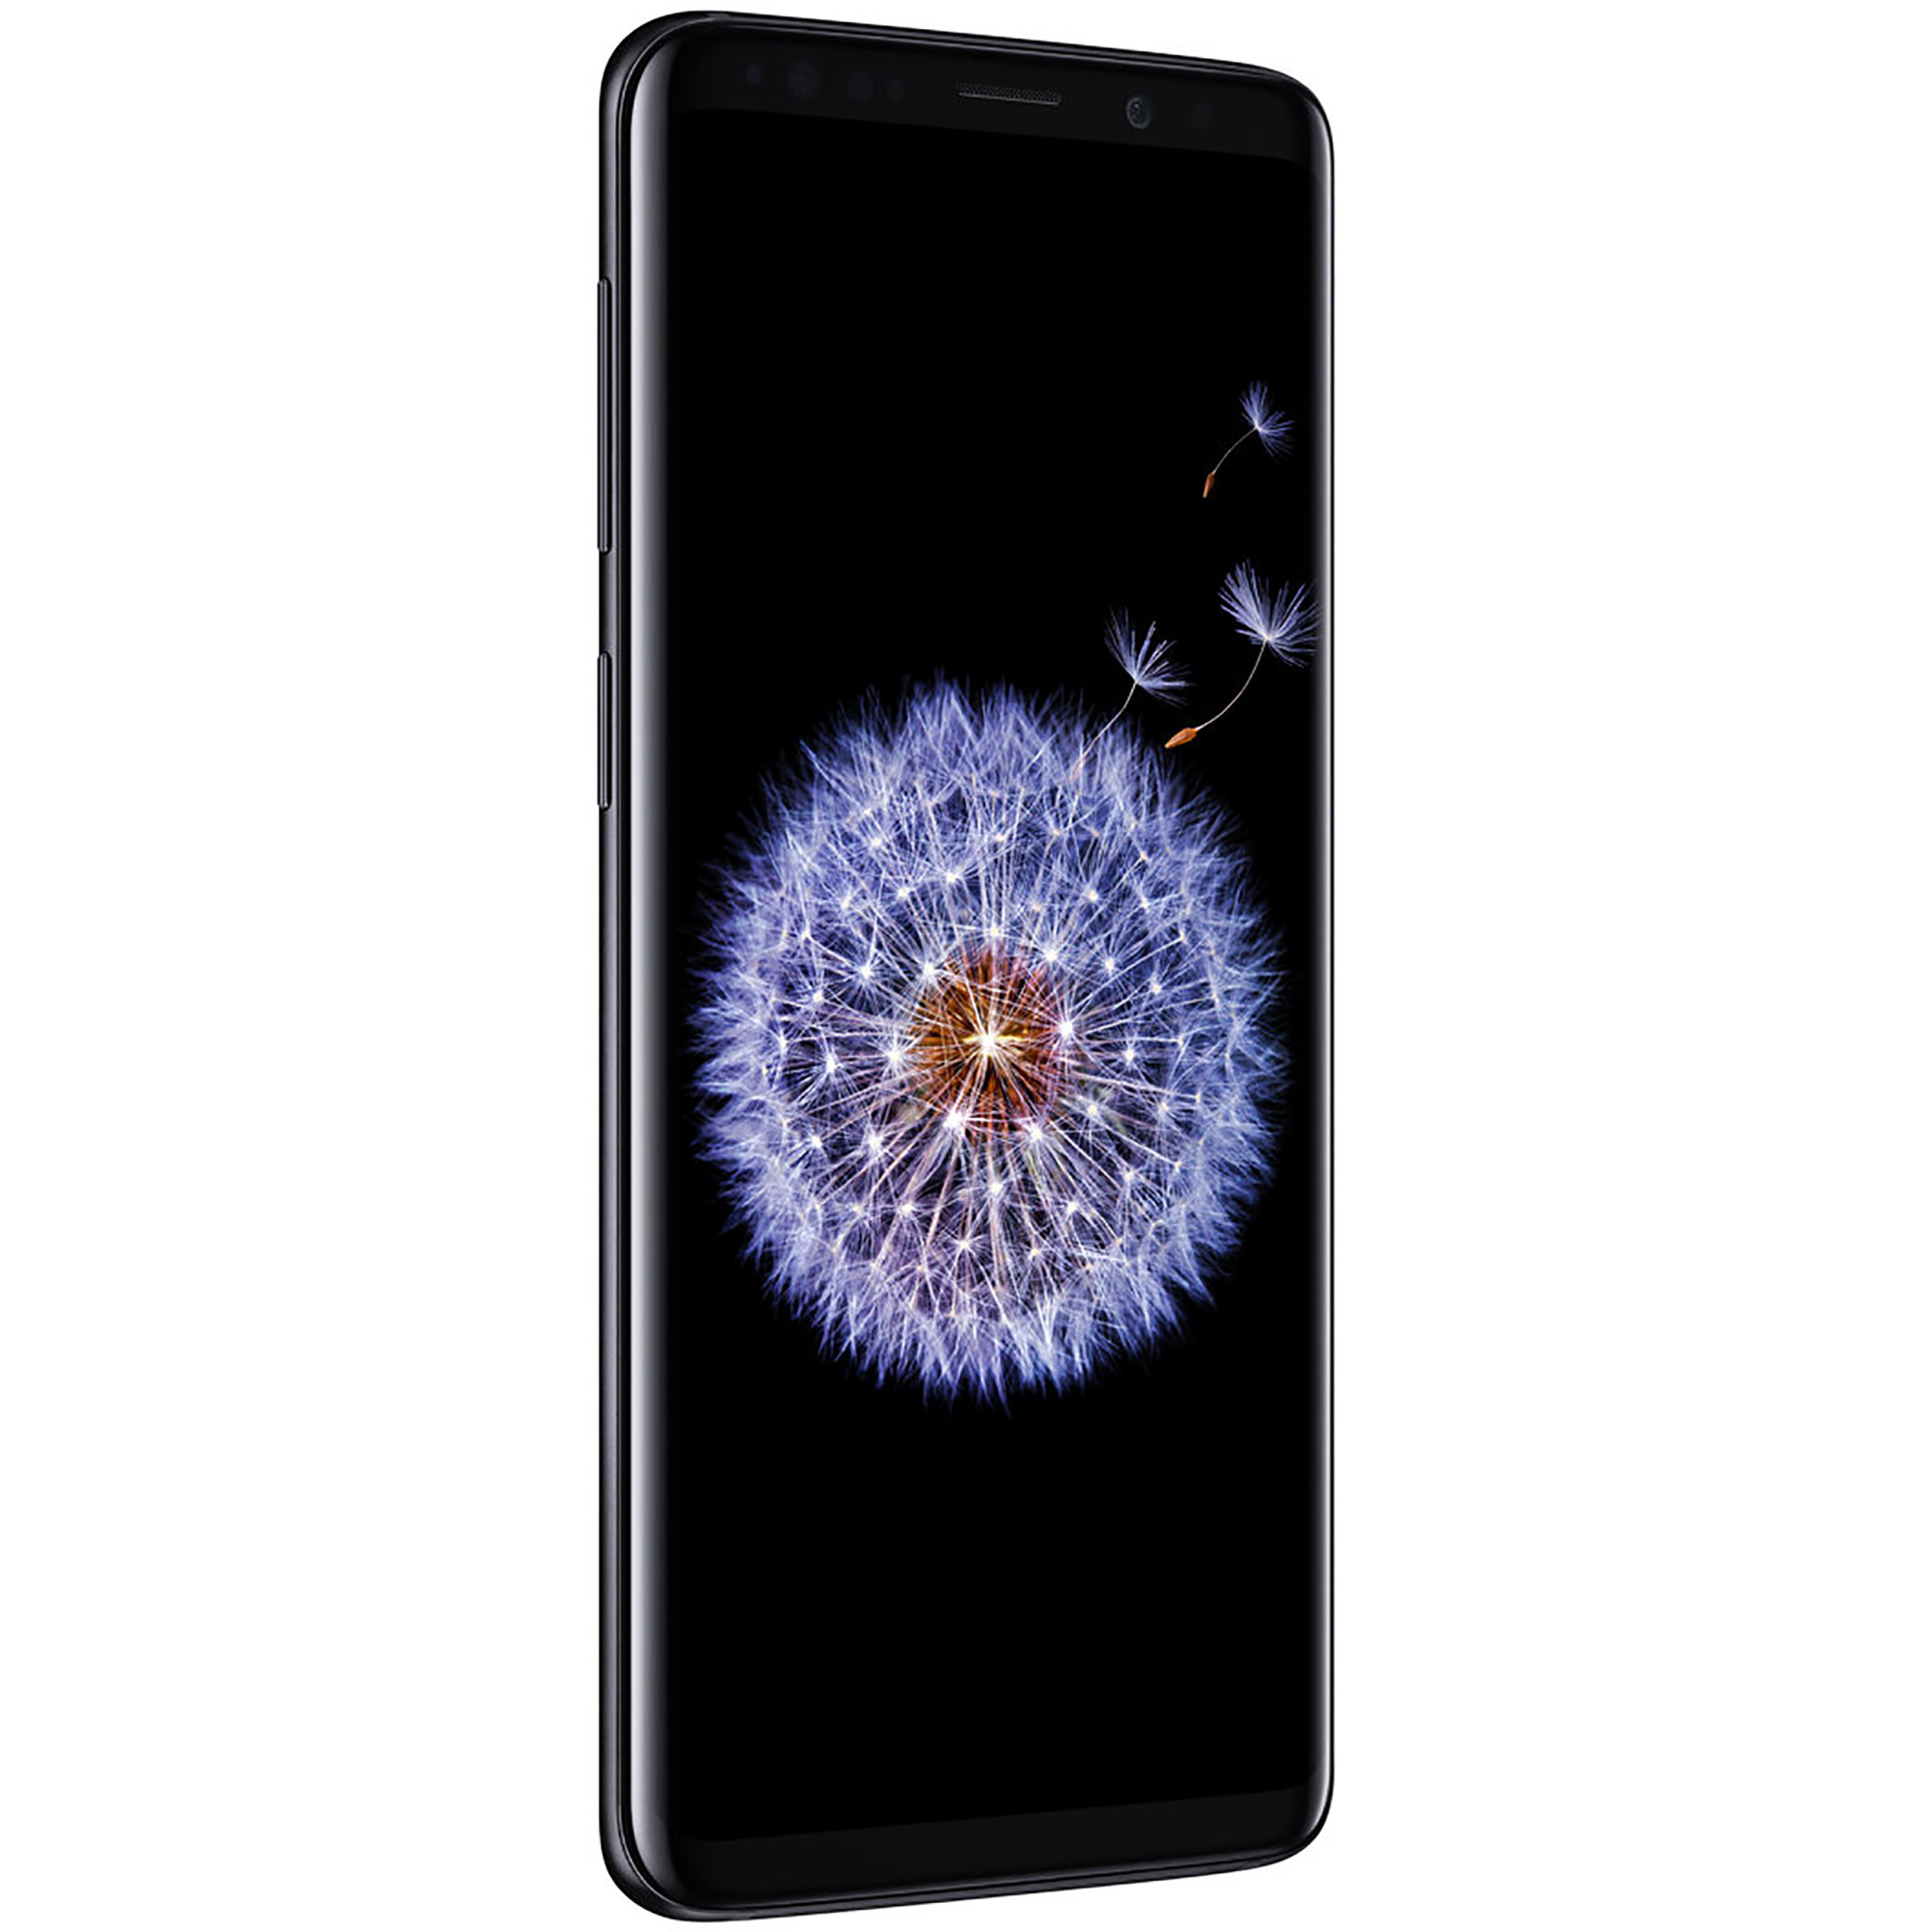 SAMSUNG Unlocked Galaxy S9, 64GB Black - Smartphone - image 4 of 4